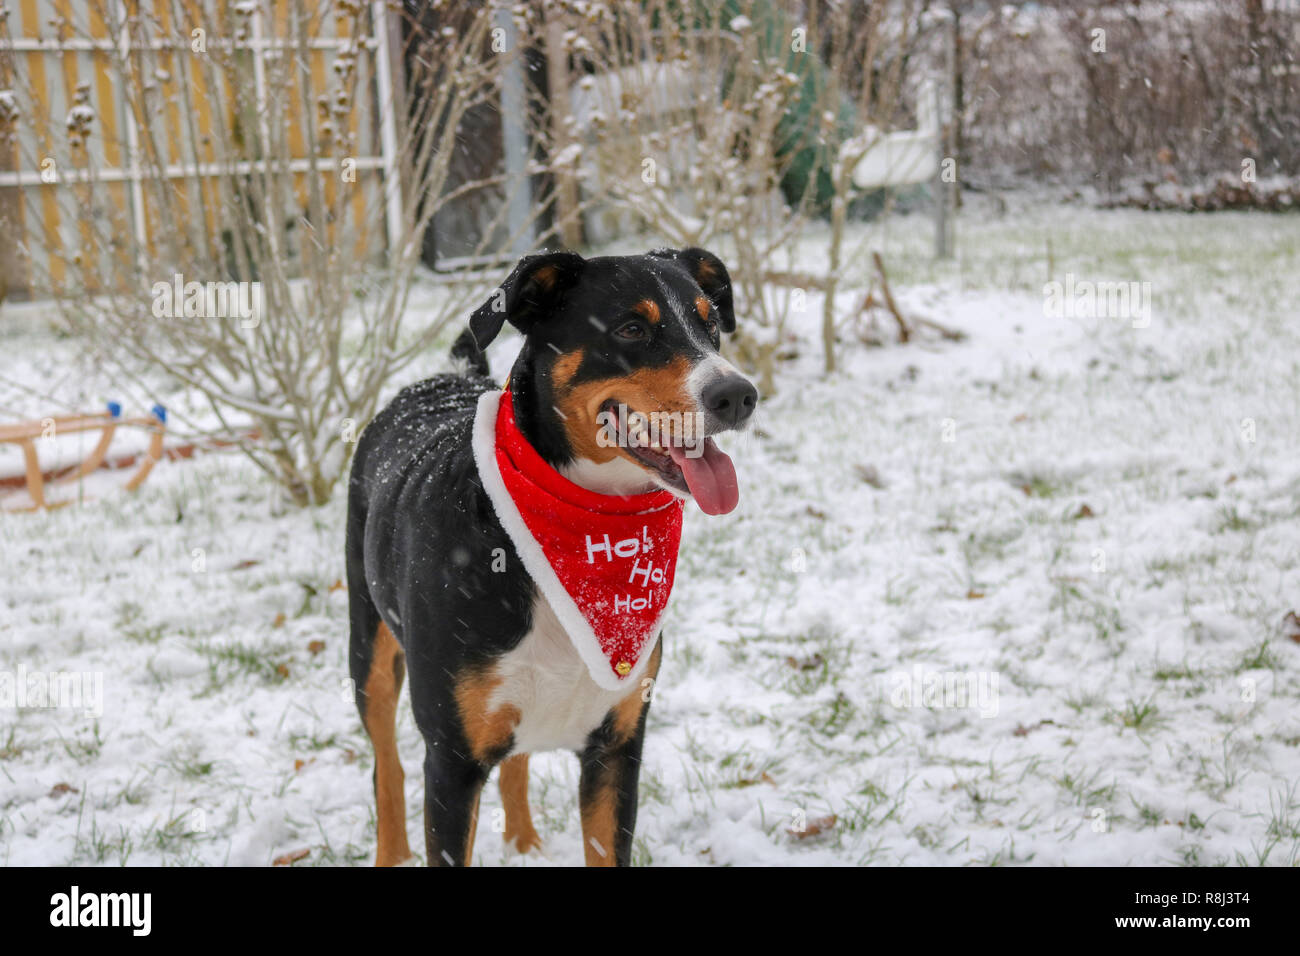 arking Appenzeller Swiss Dog on Snow Stock Photo